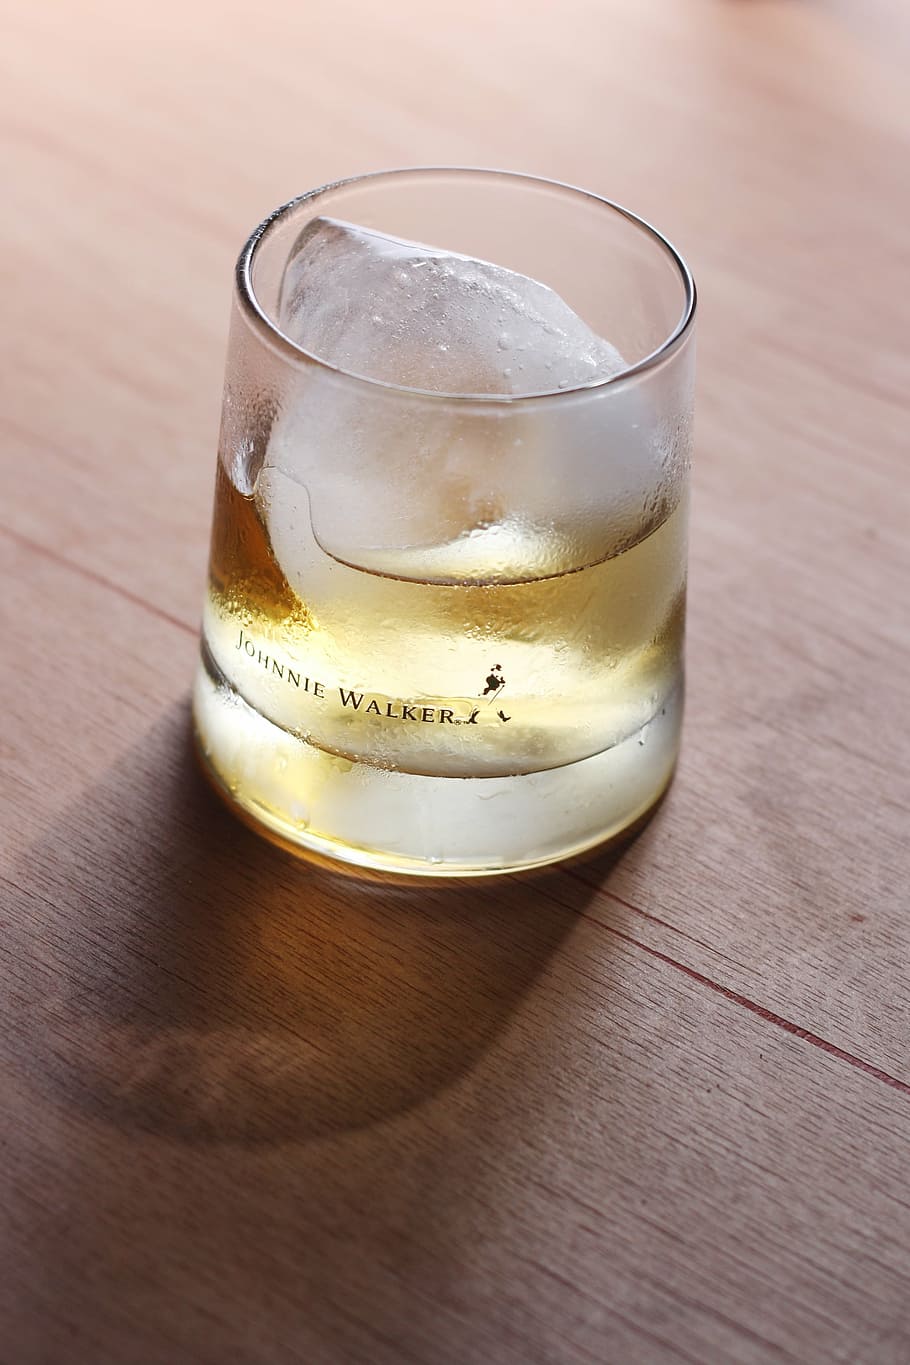 johnnie walker glass, beverage, ice, glass, whiskey, whisky, johnnie walker, table, refreshment, drink